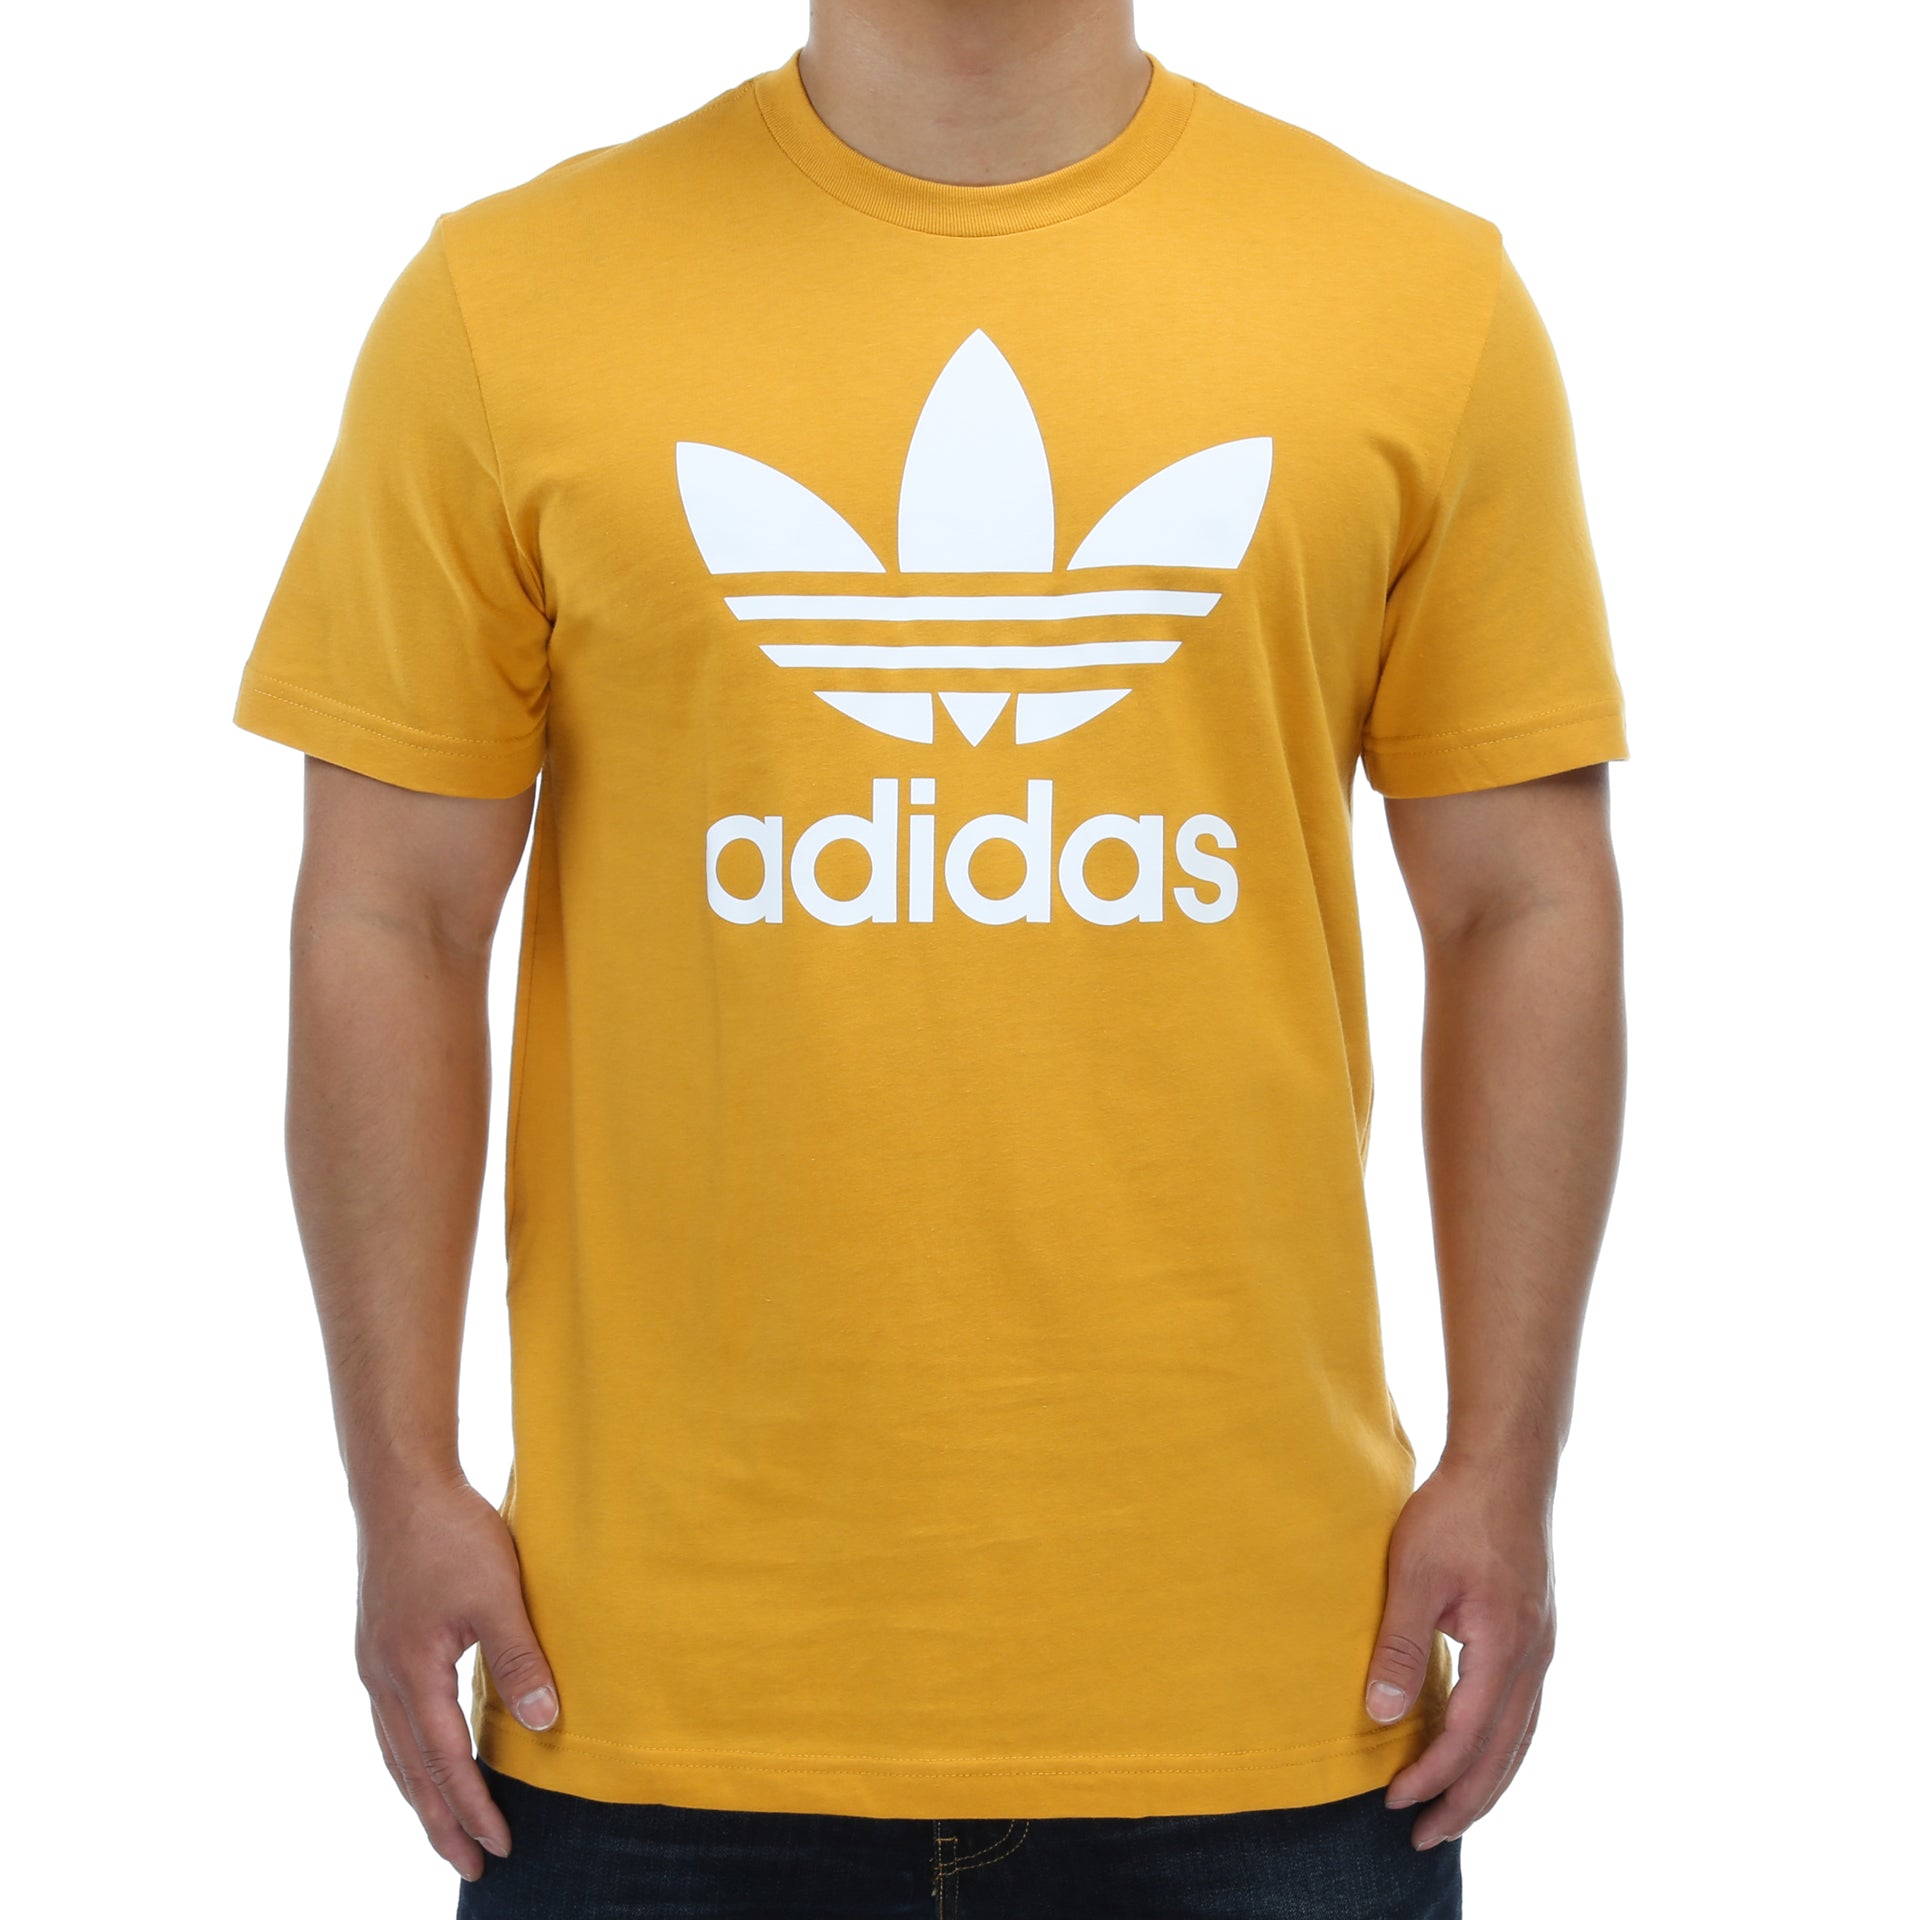 Adidas Original Tee - Tactile Yellow - New Star